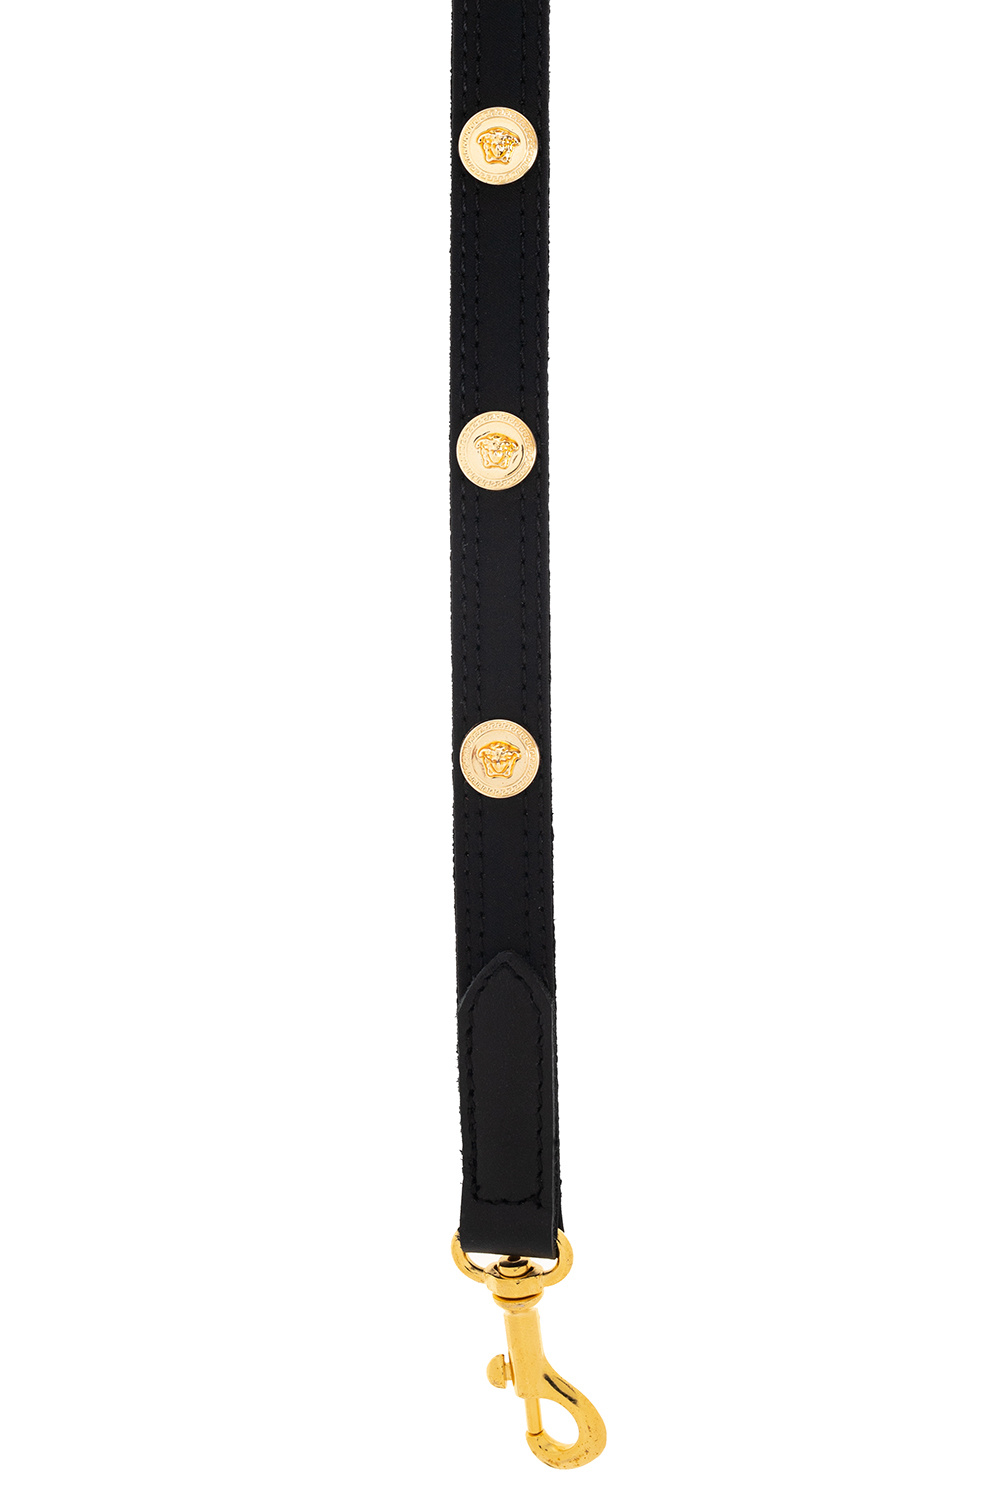 Versace Home Collar and leash set